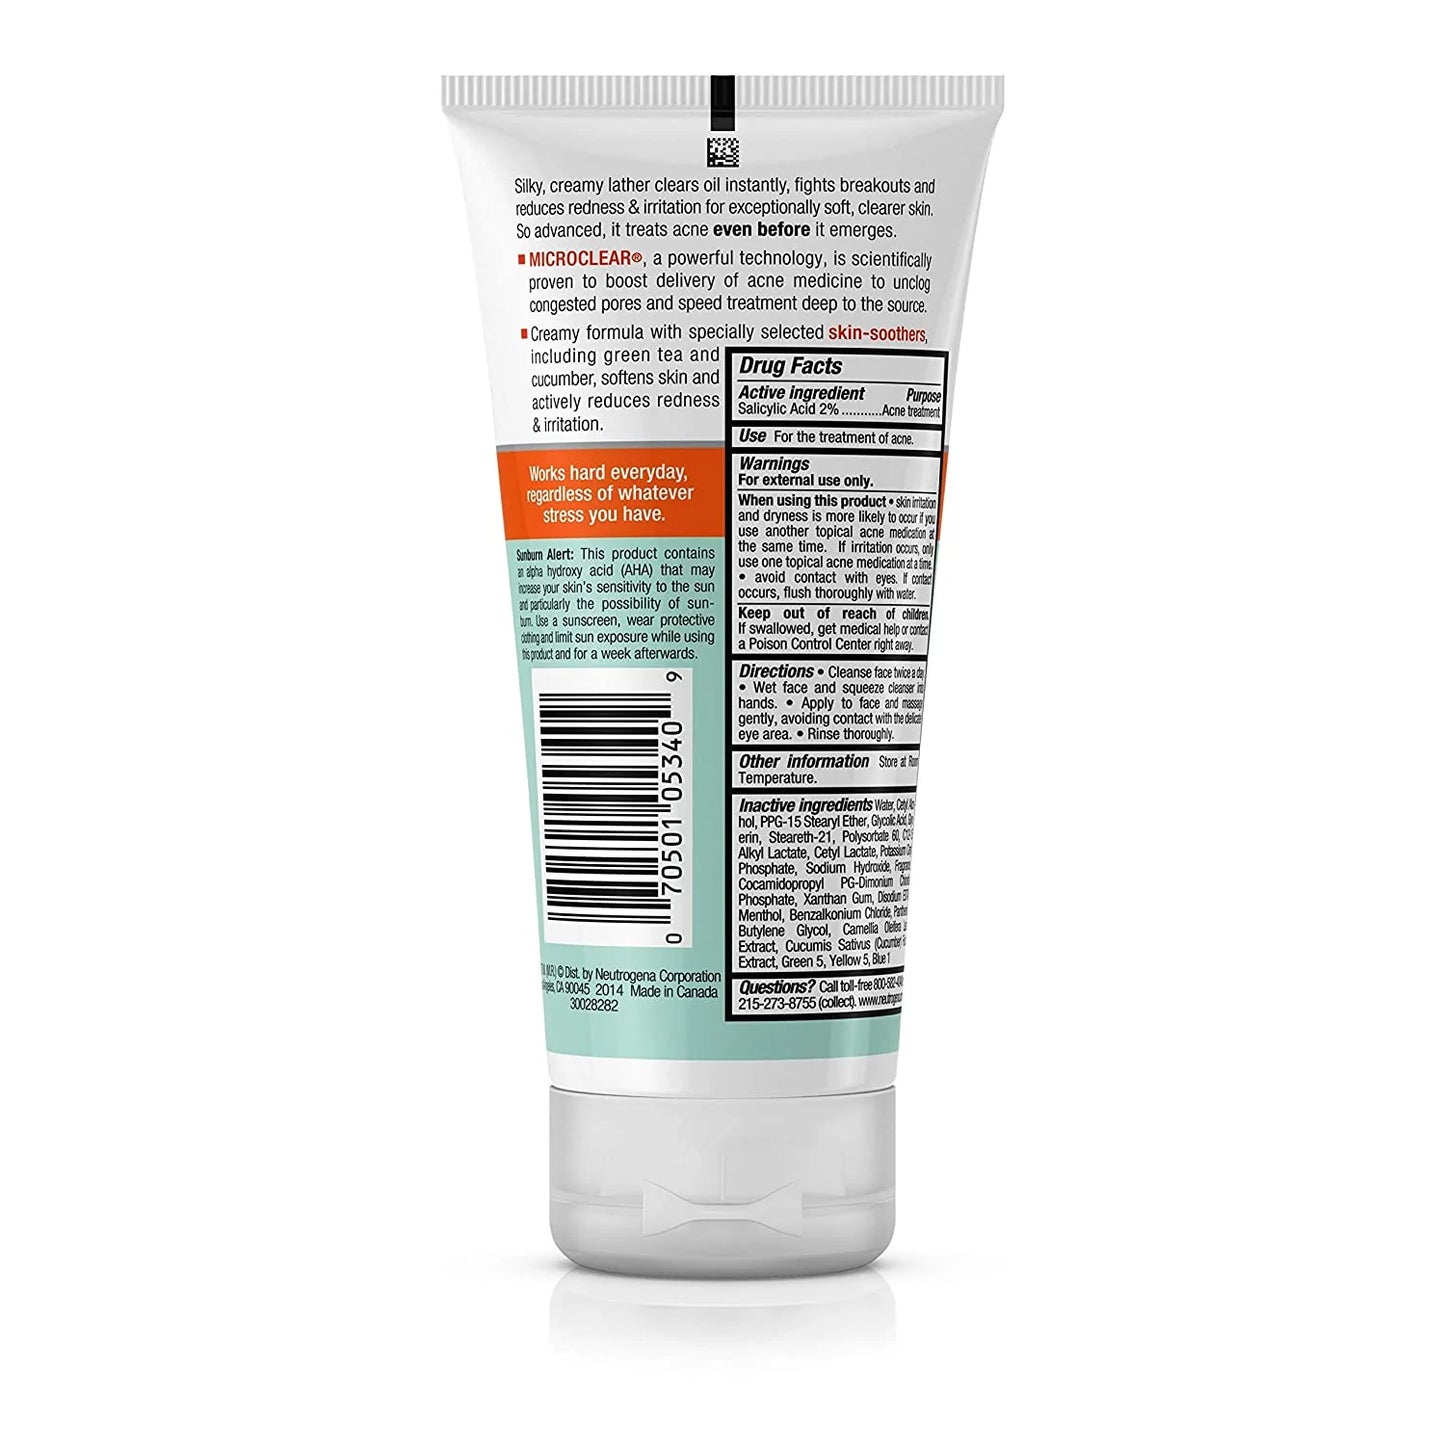 Neutrogena Oil-Free Acne Stress Control Power-Cream Face Wash 6 fl. onz